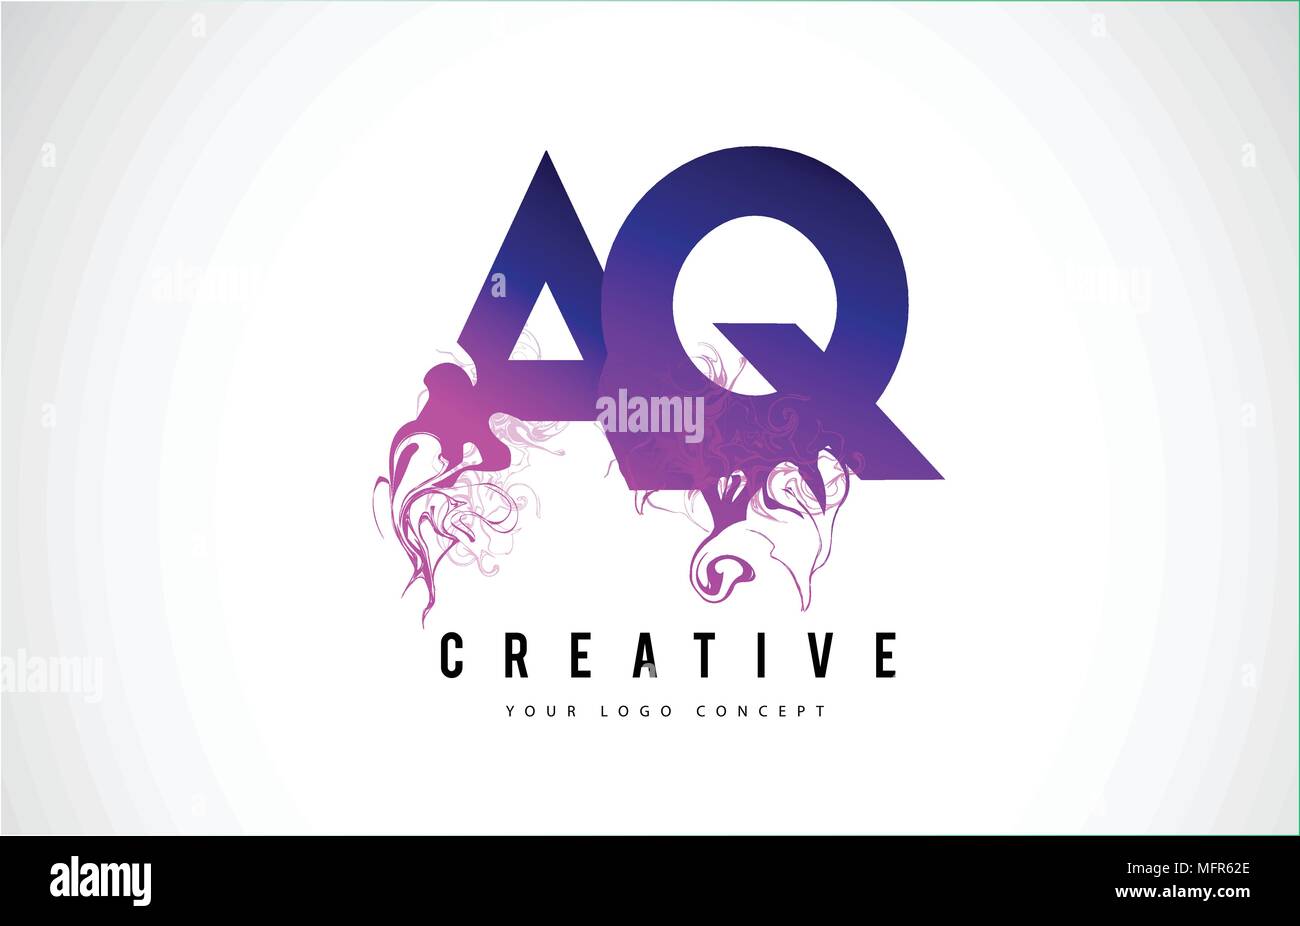 AQ A Q Lettre Violet Logo Design créatif avec effet liquide Vector Illustration. Illustration de Vecteur